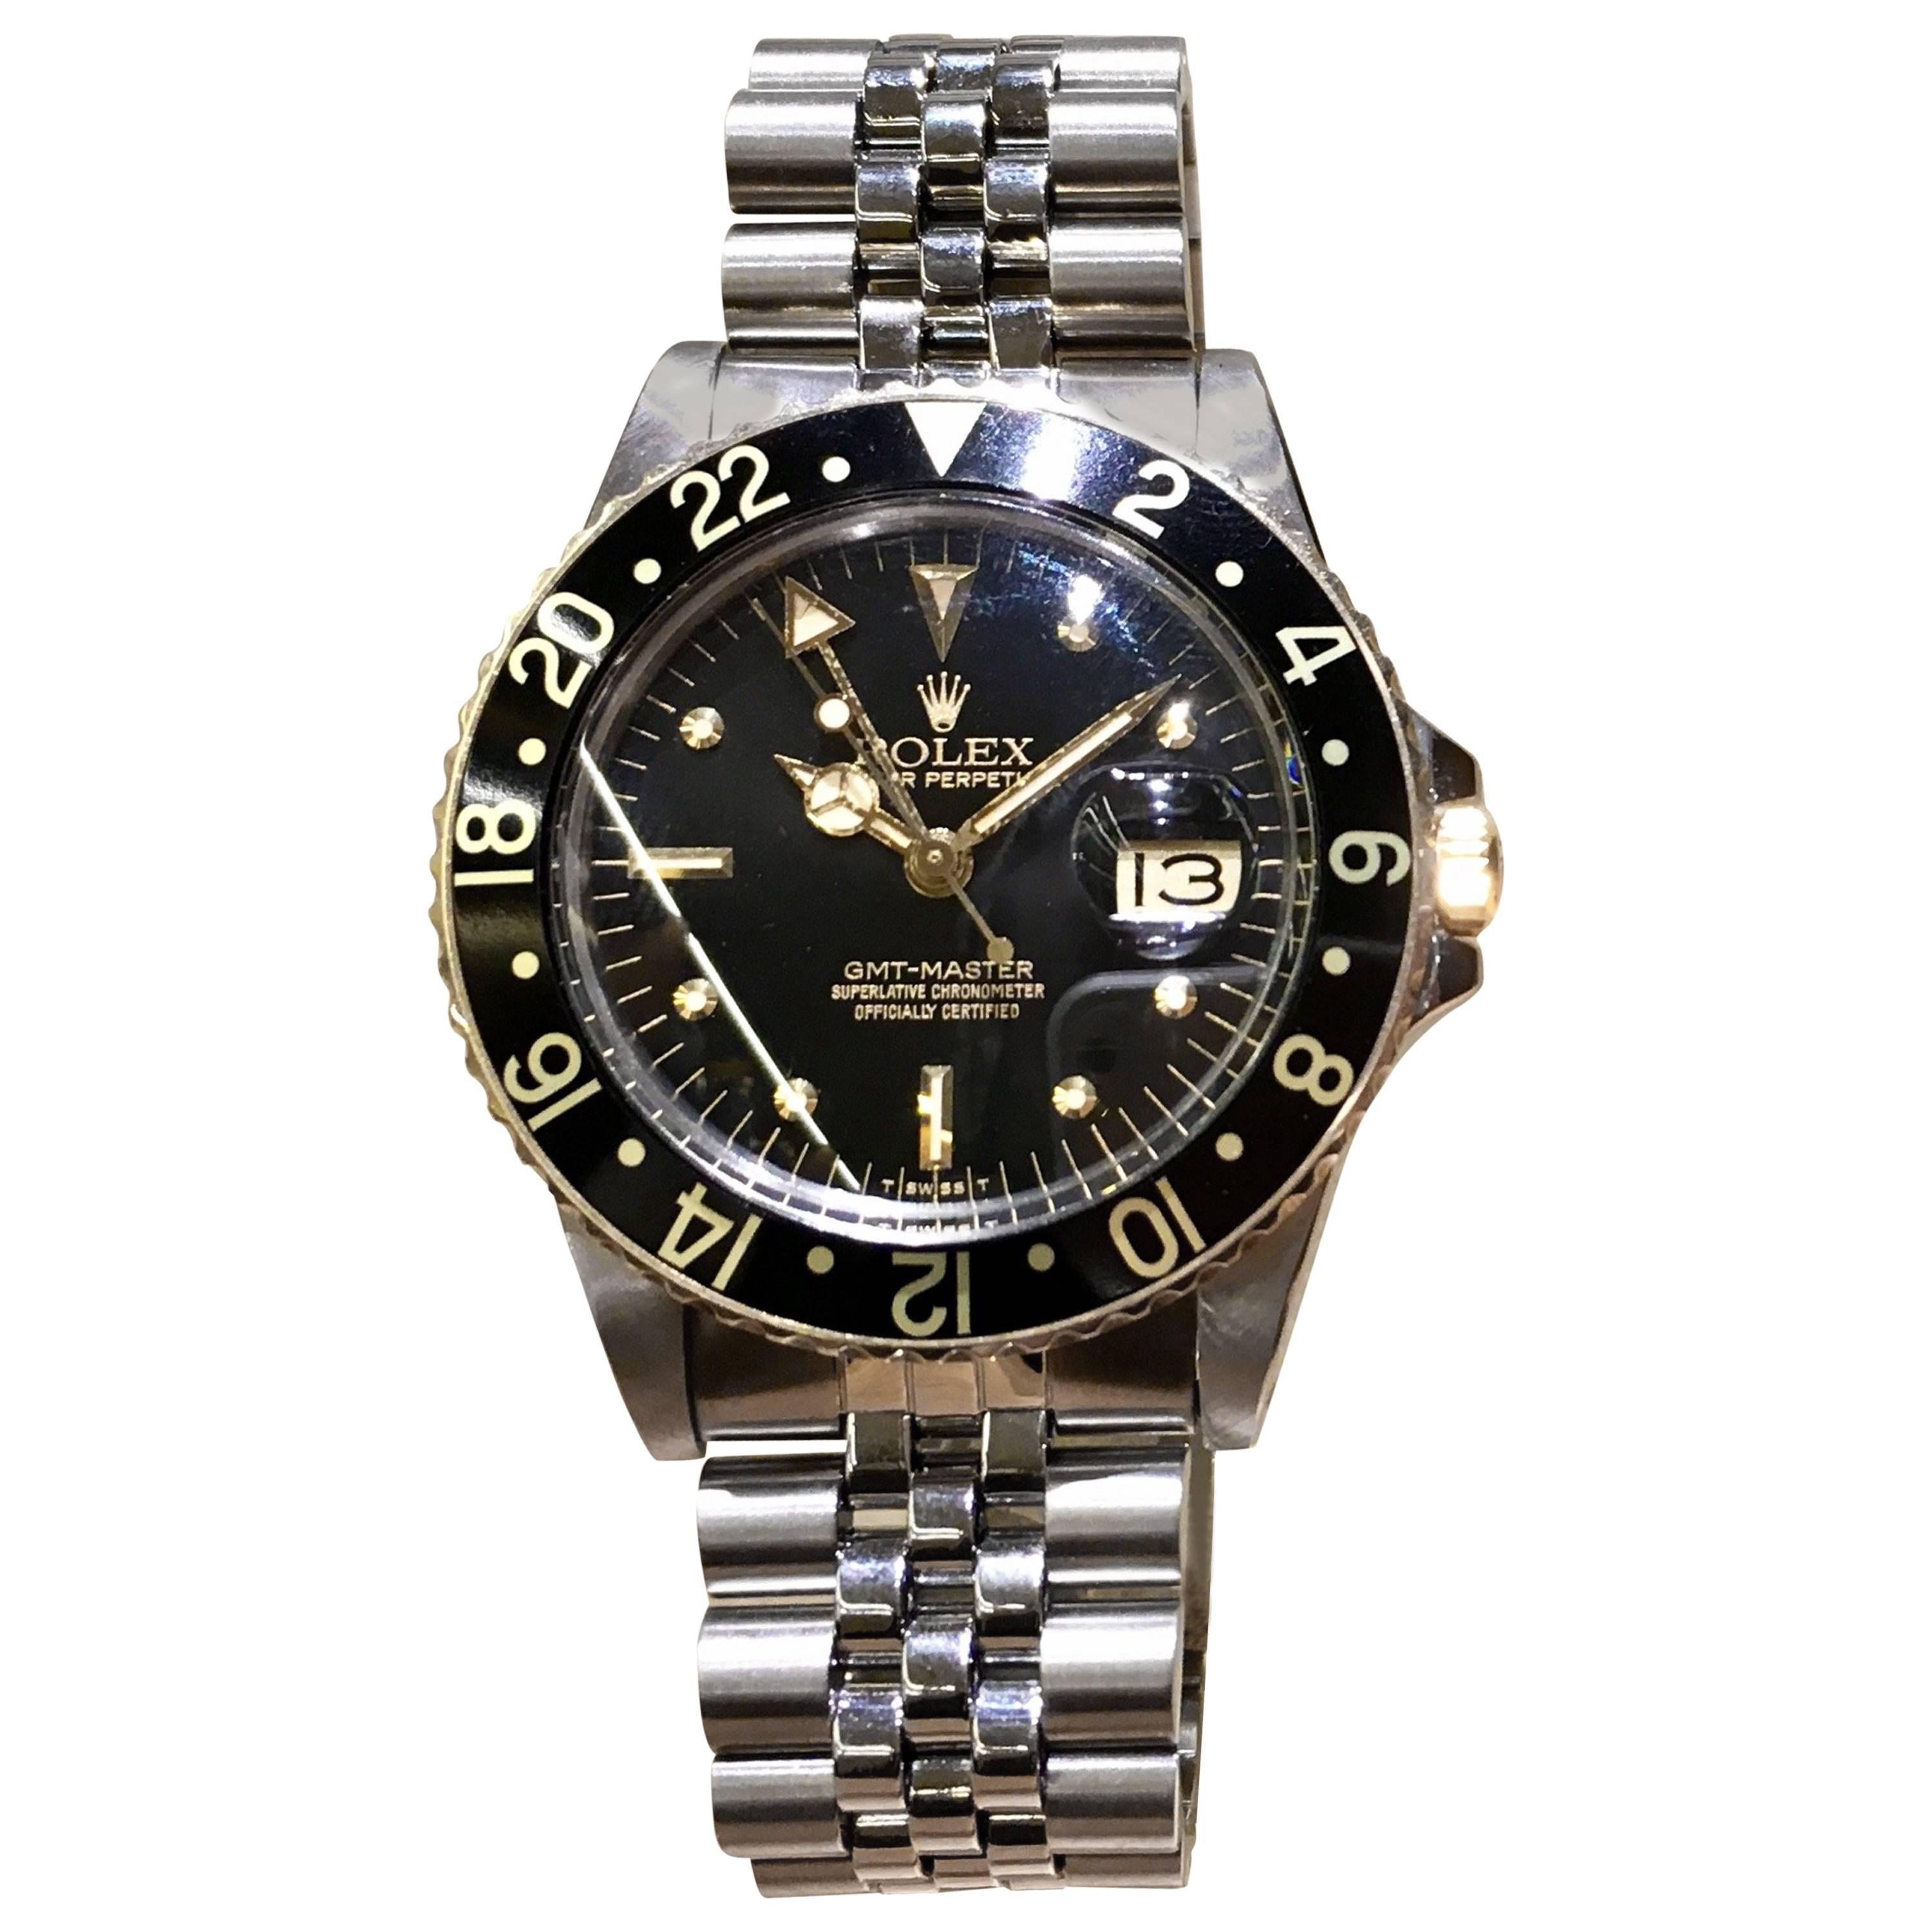 Rolex Stainless Steel GMT Black dial Date Wristwatch Ref 16753, circa 1980